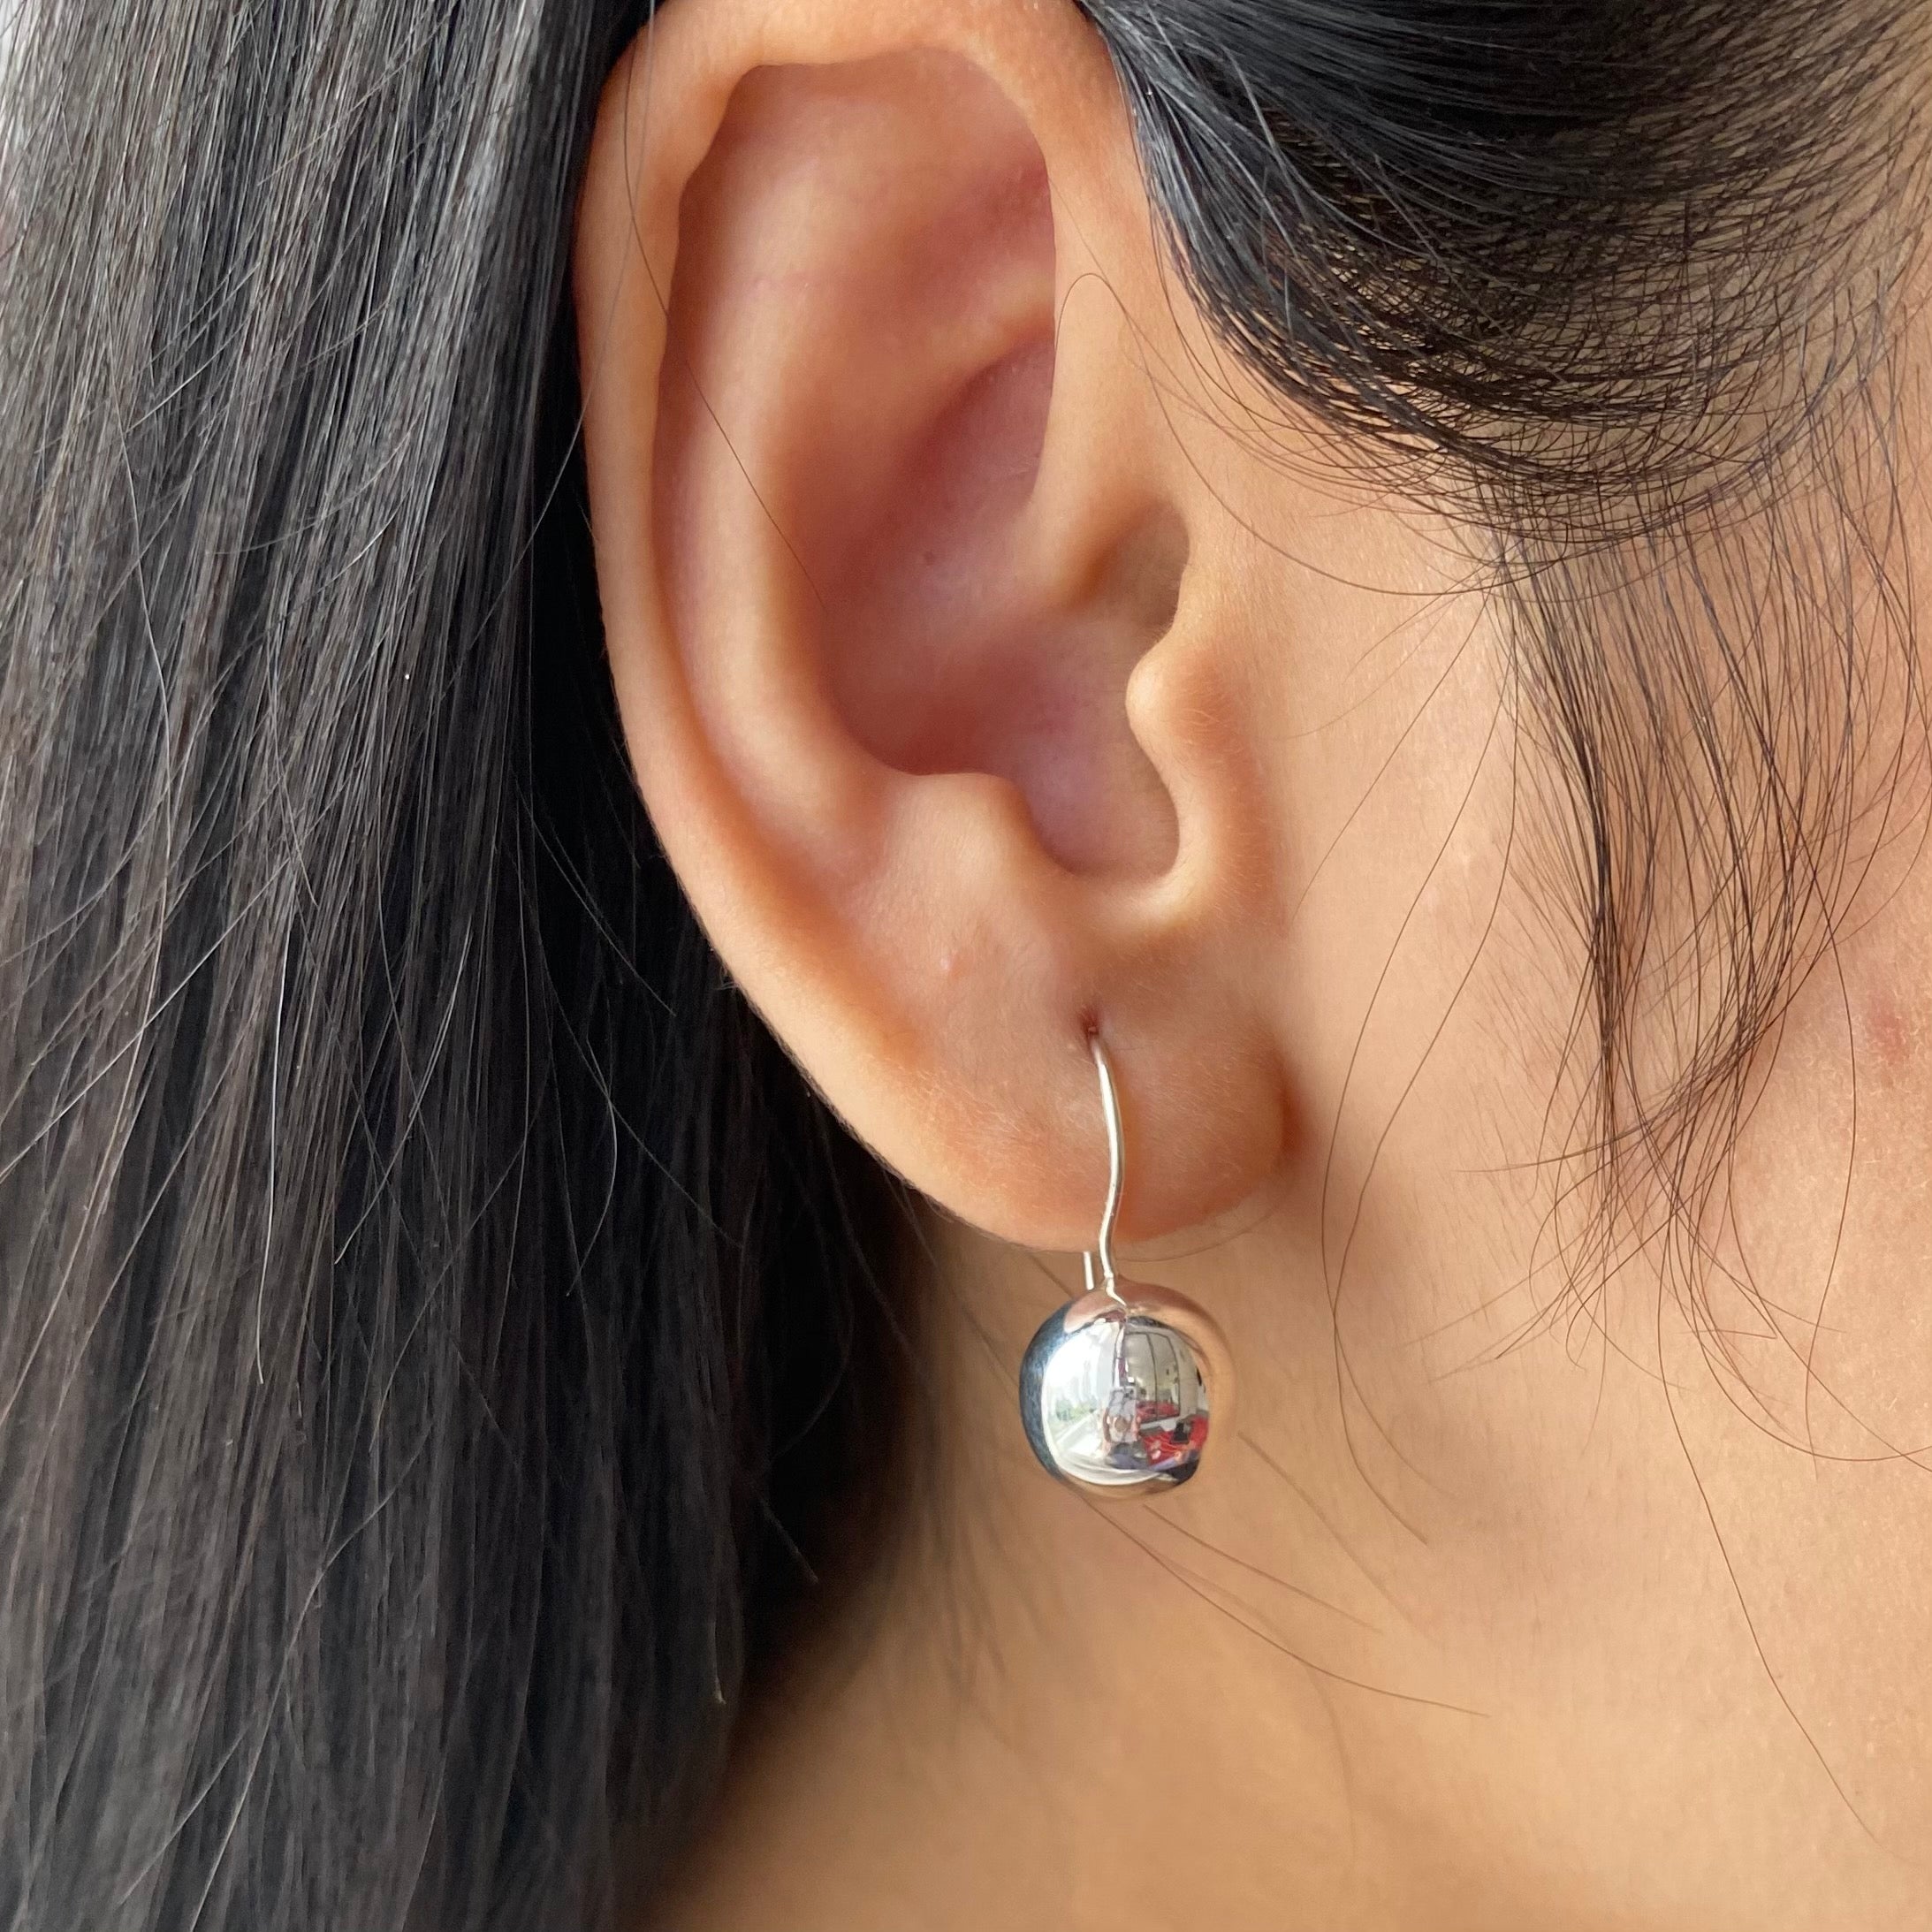 Silver Hook Earrings with Sphere Drop